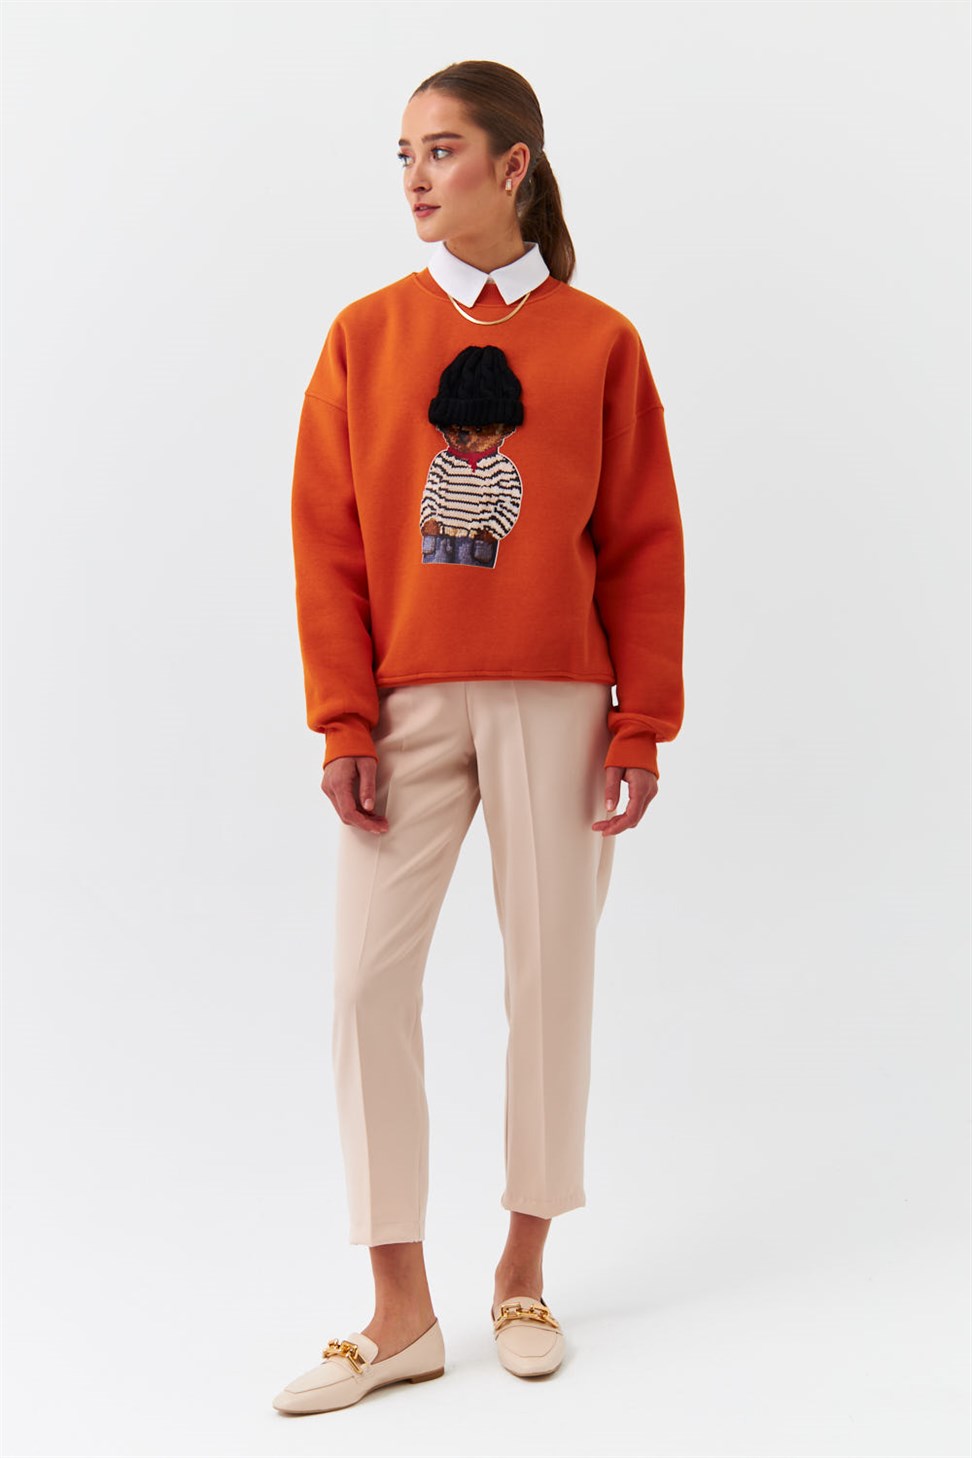 Modest Teddy Bear Printed Orange Womens Sweatshirt